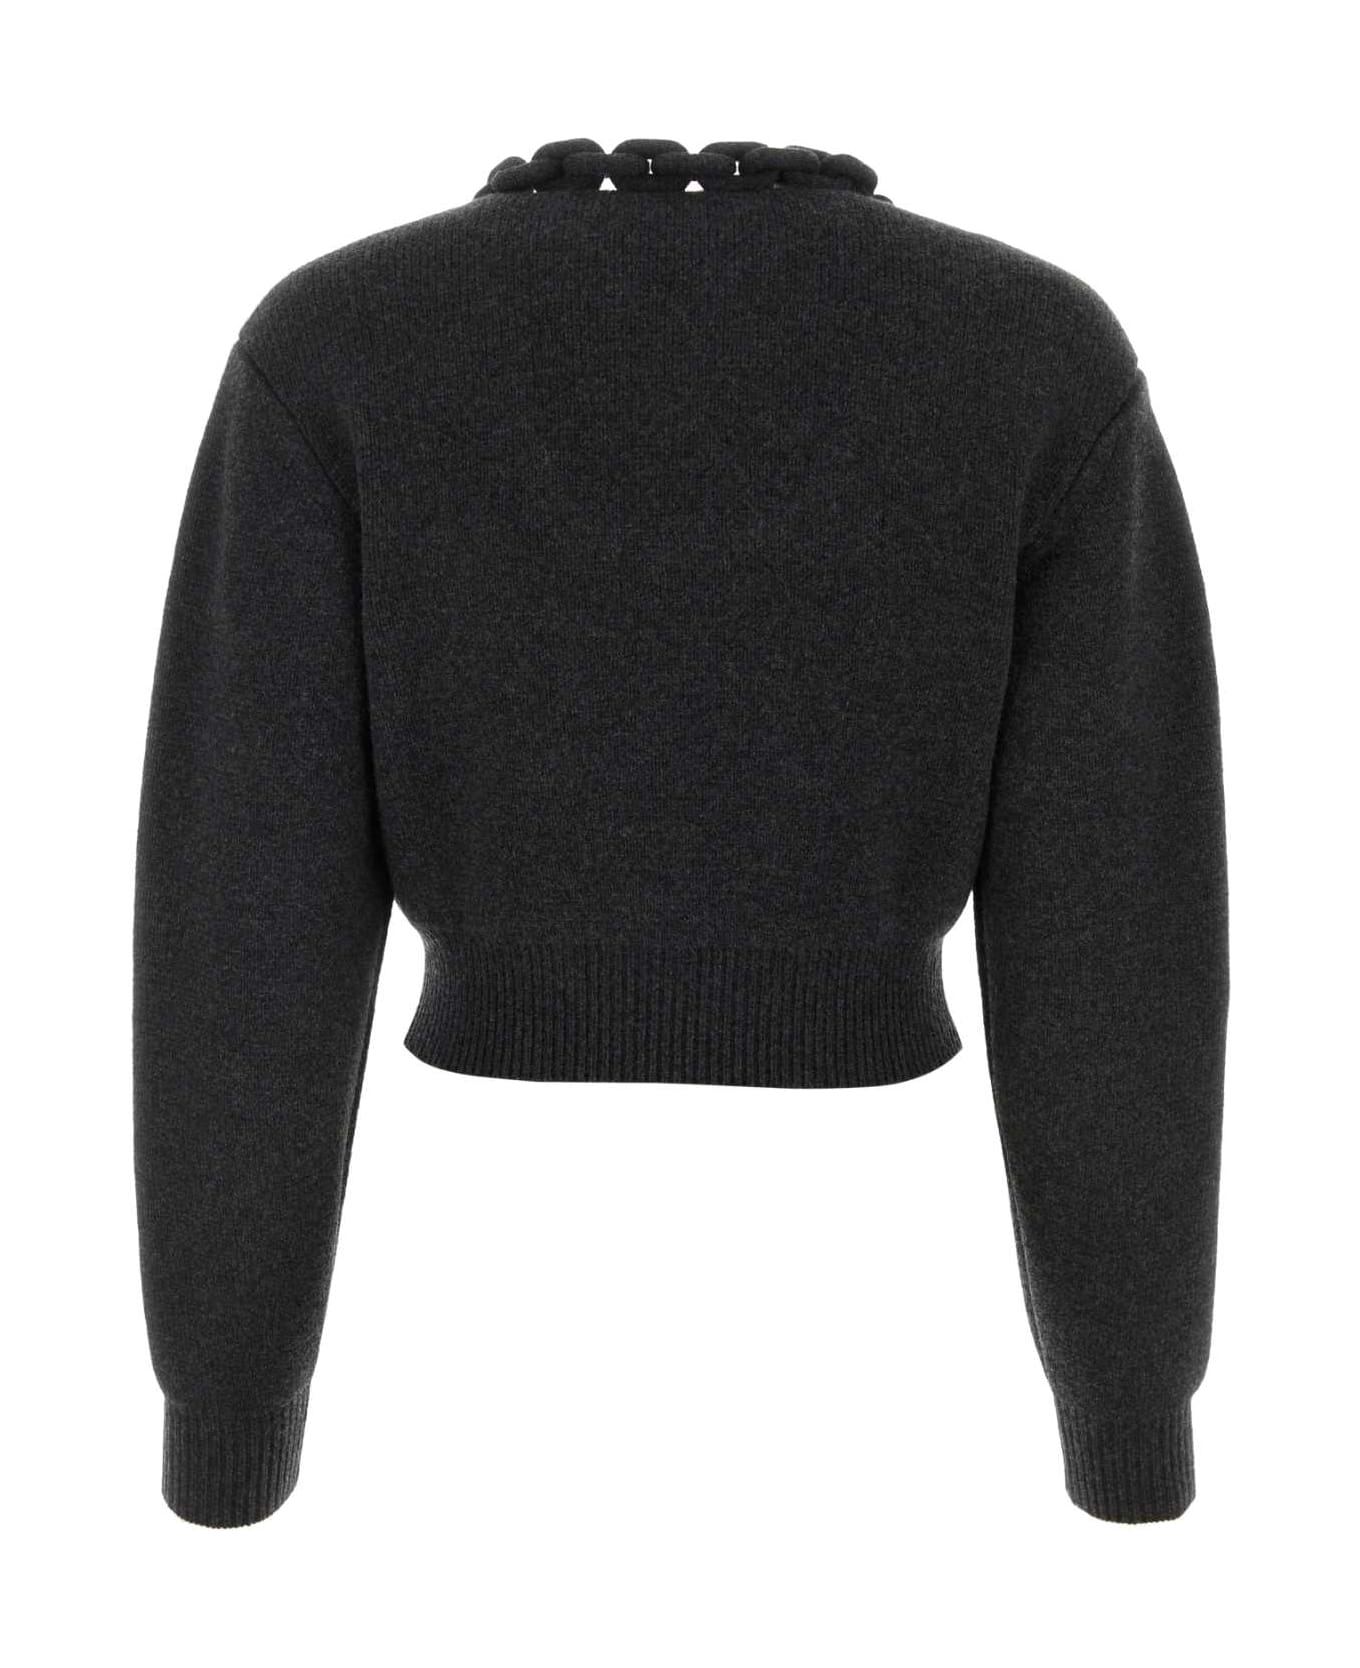 Alexander Wang Graphite Wool Blend Sweater - CHARCOALMELANGE